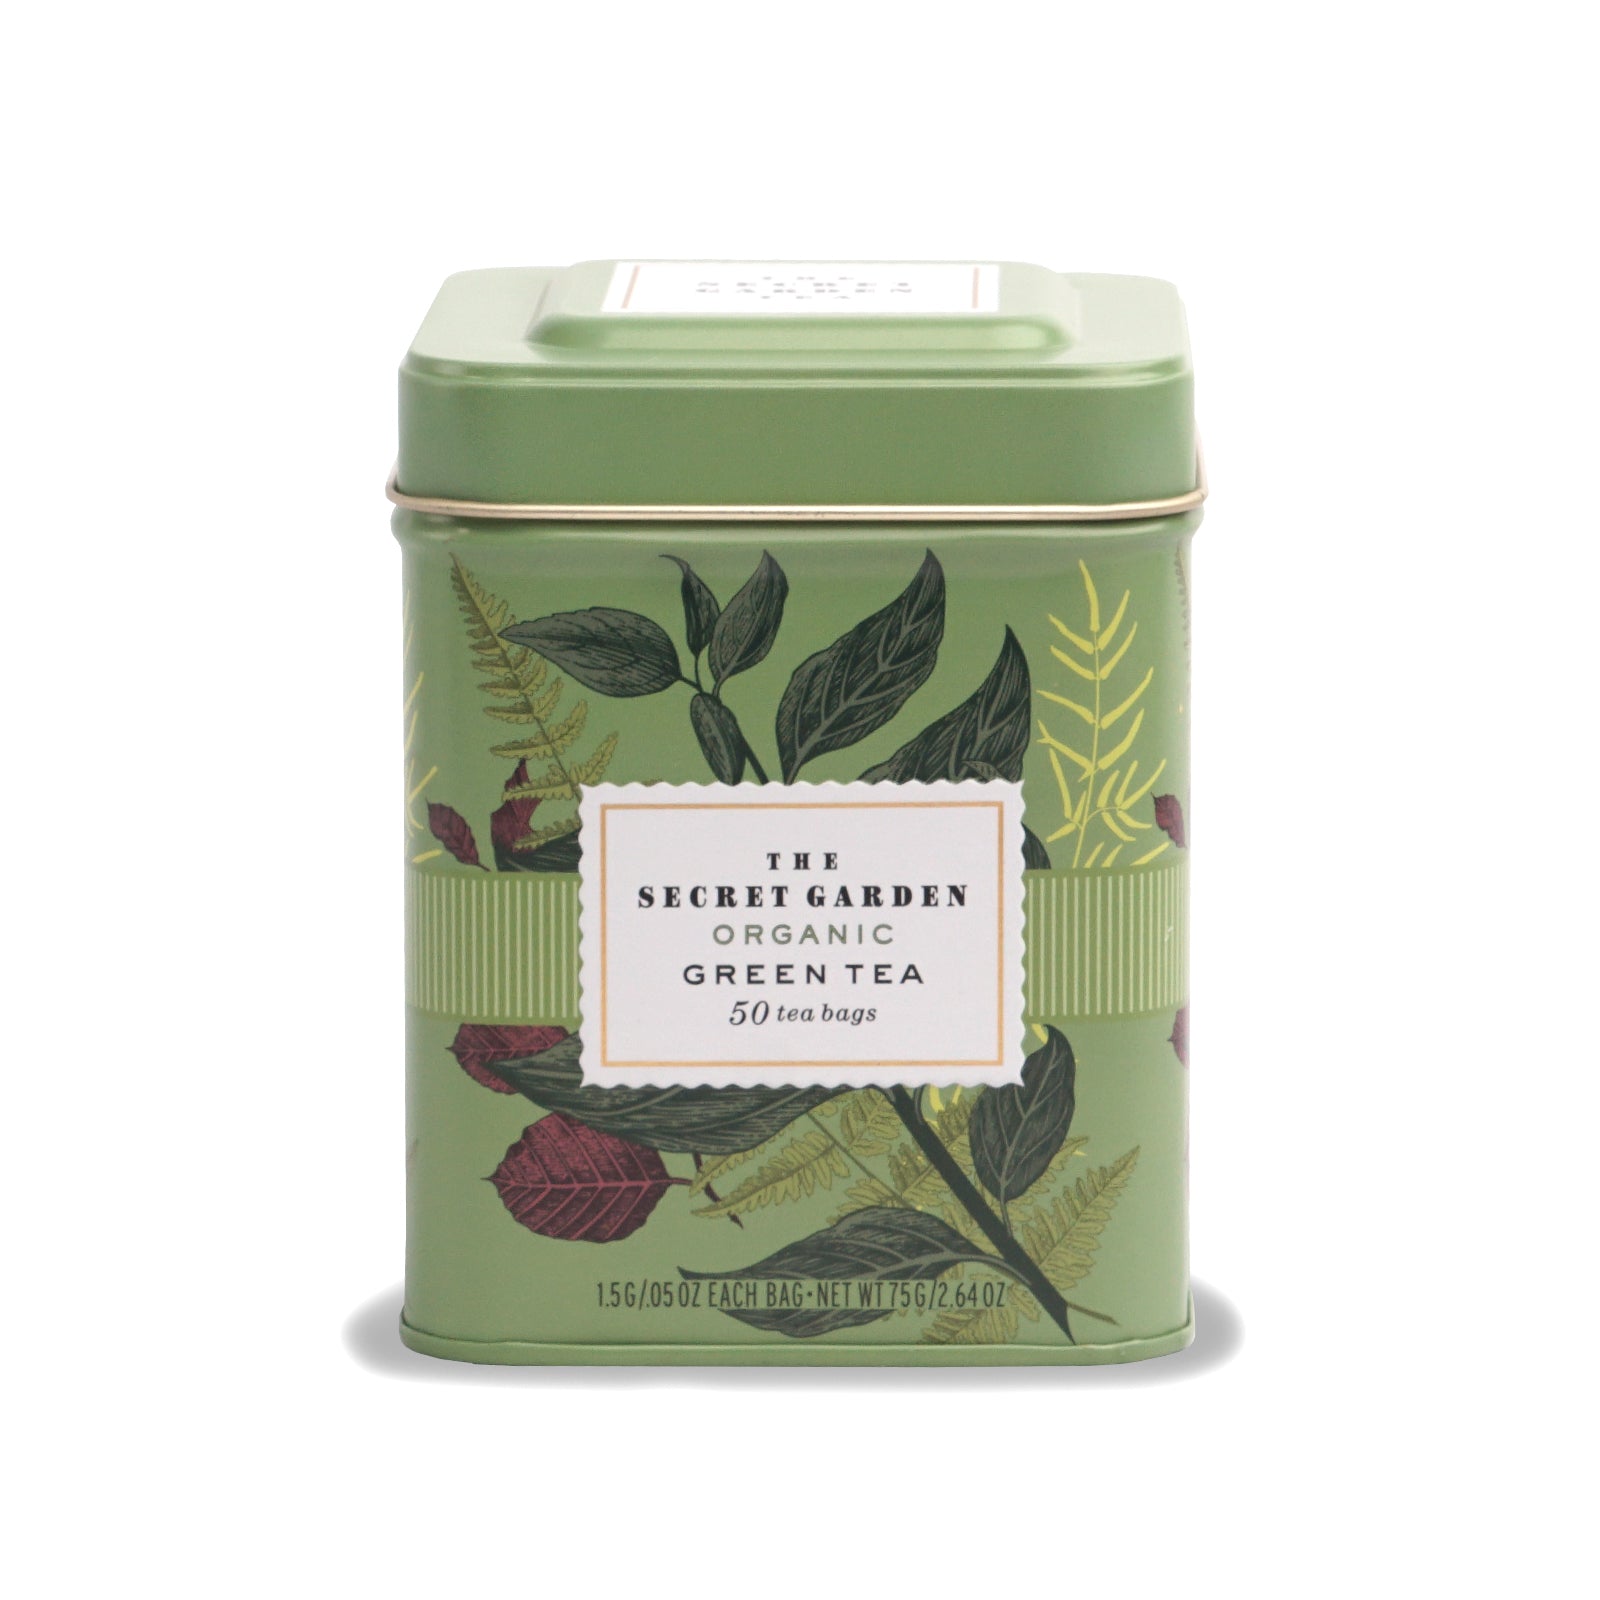 The Secret Garden Organic Green Tea